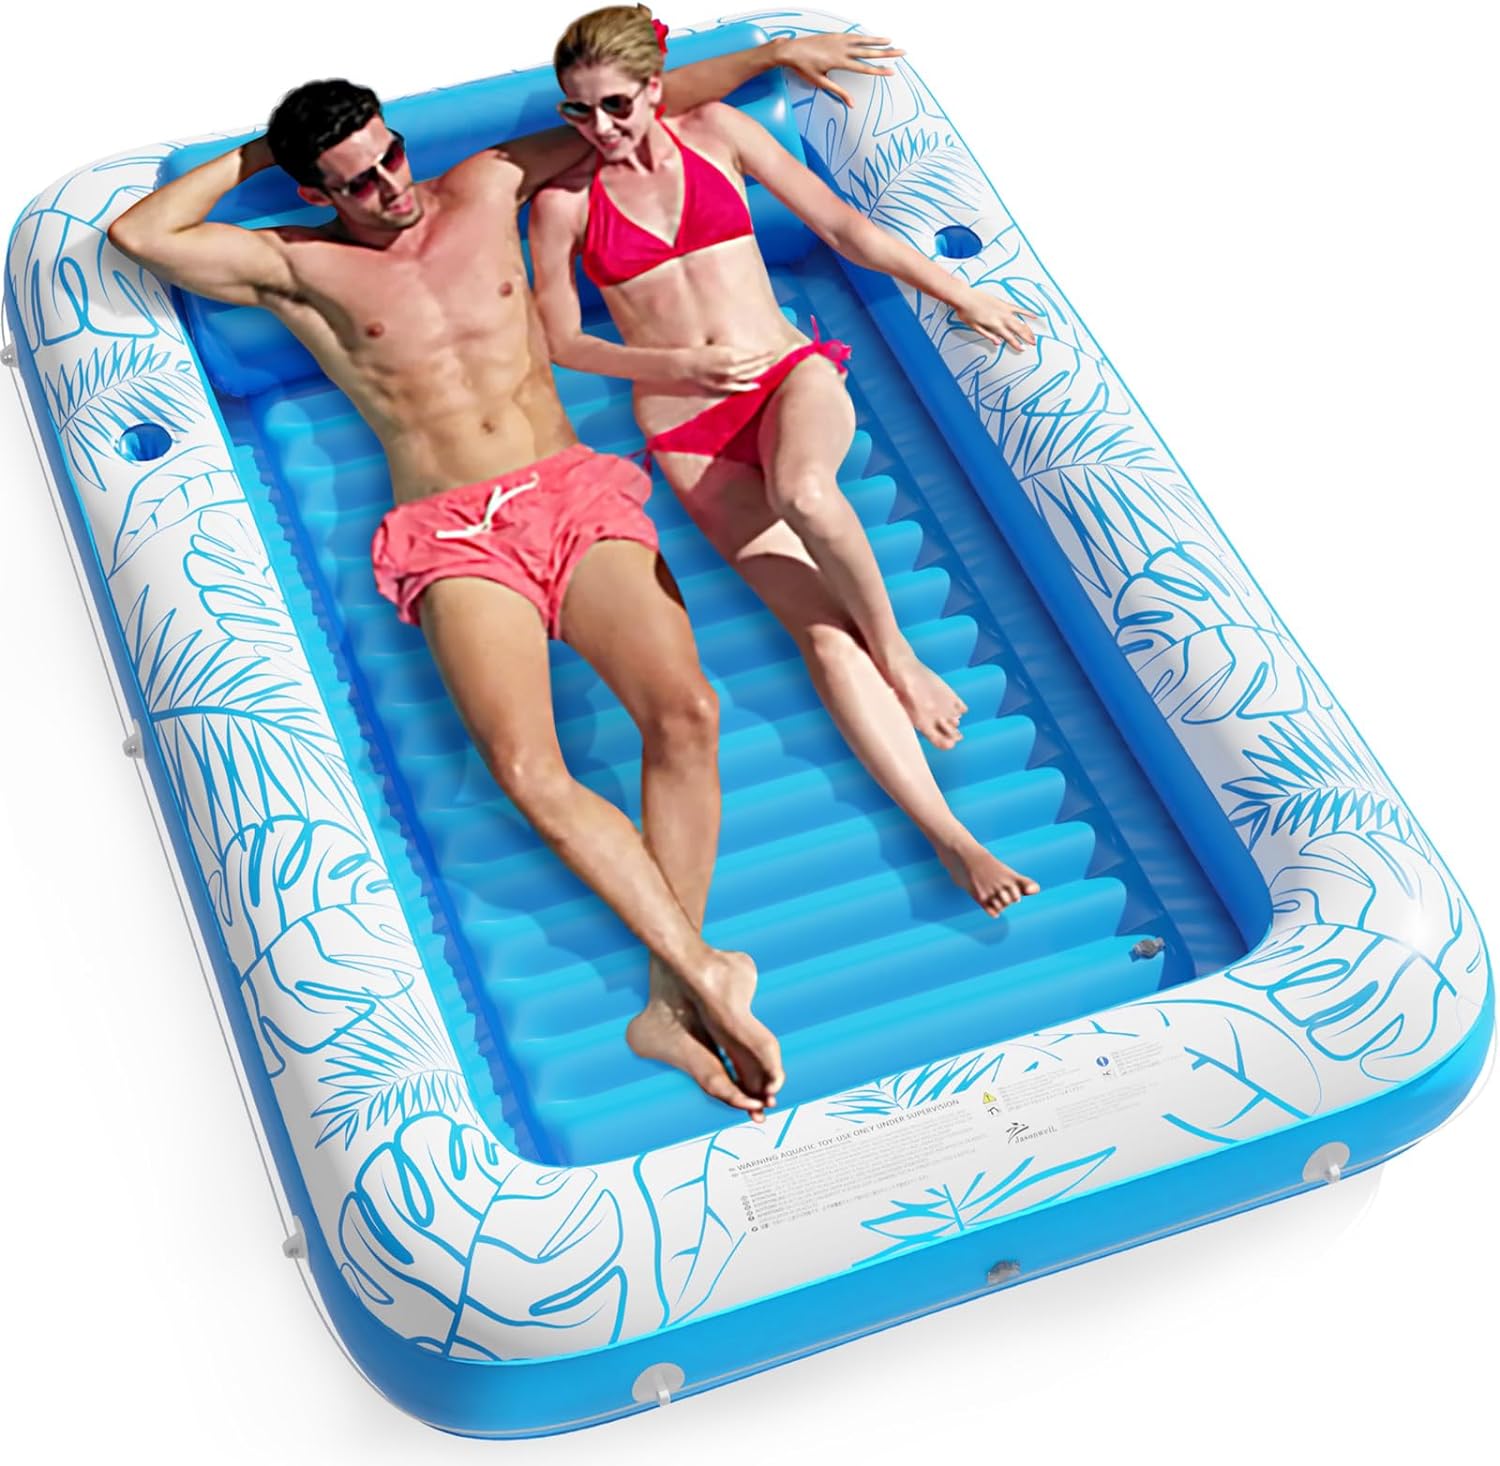 Flotador inflable de piscina para tomar sol con almohadilla | Tamaño L